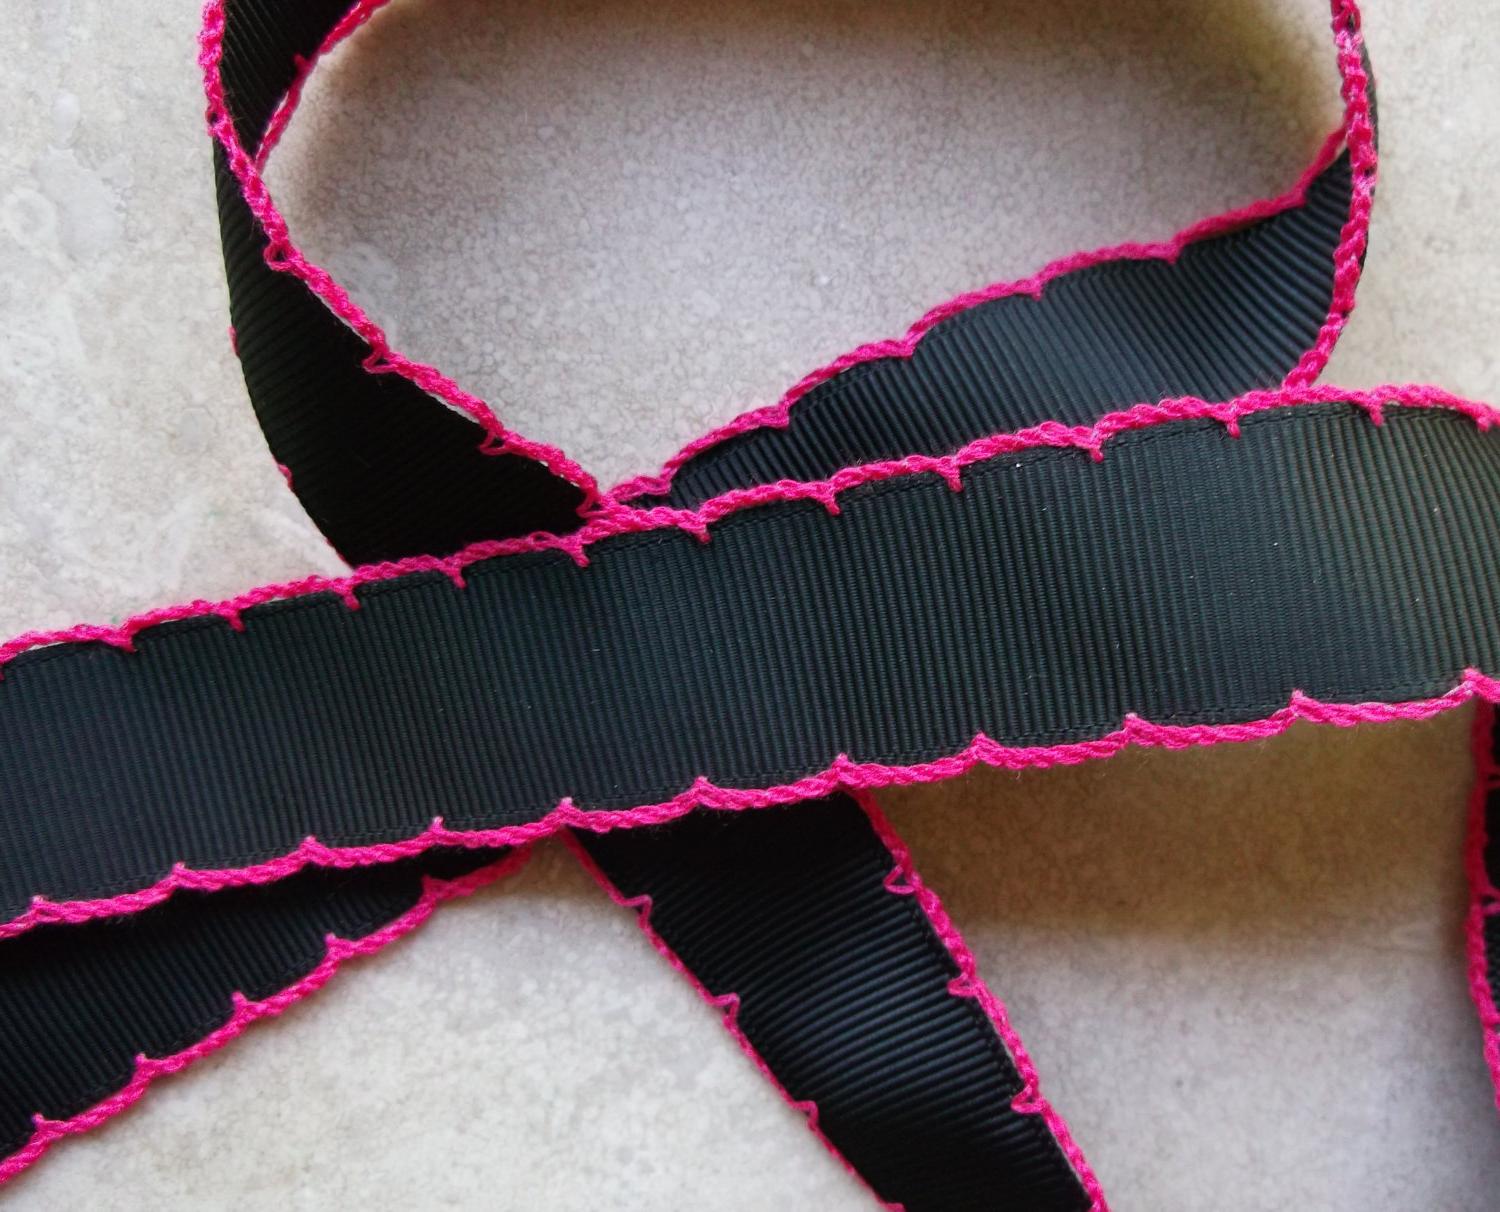 Classic hot pink Moonstitch on black 7 8 grosgrain ribbon